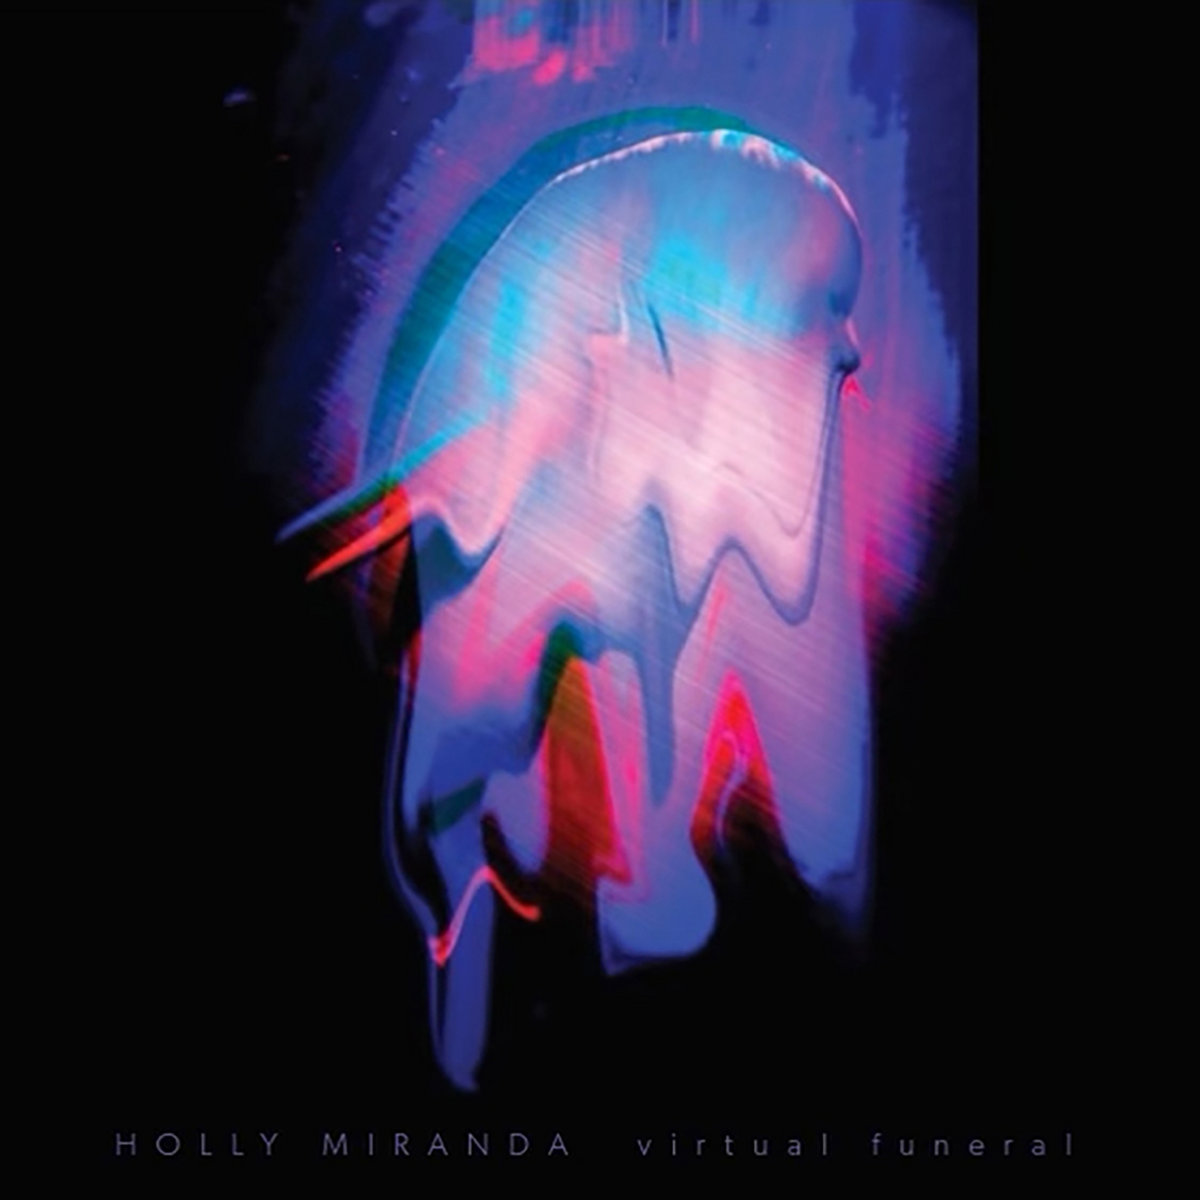 Album For Today: @hollymiranda - 'Virtual Funeral' - A lovely varied album of great songs via @eyekneerecords hollymiranda.com